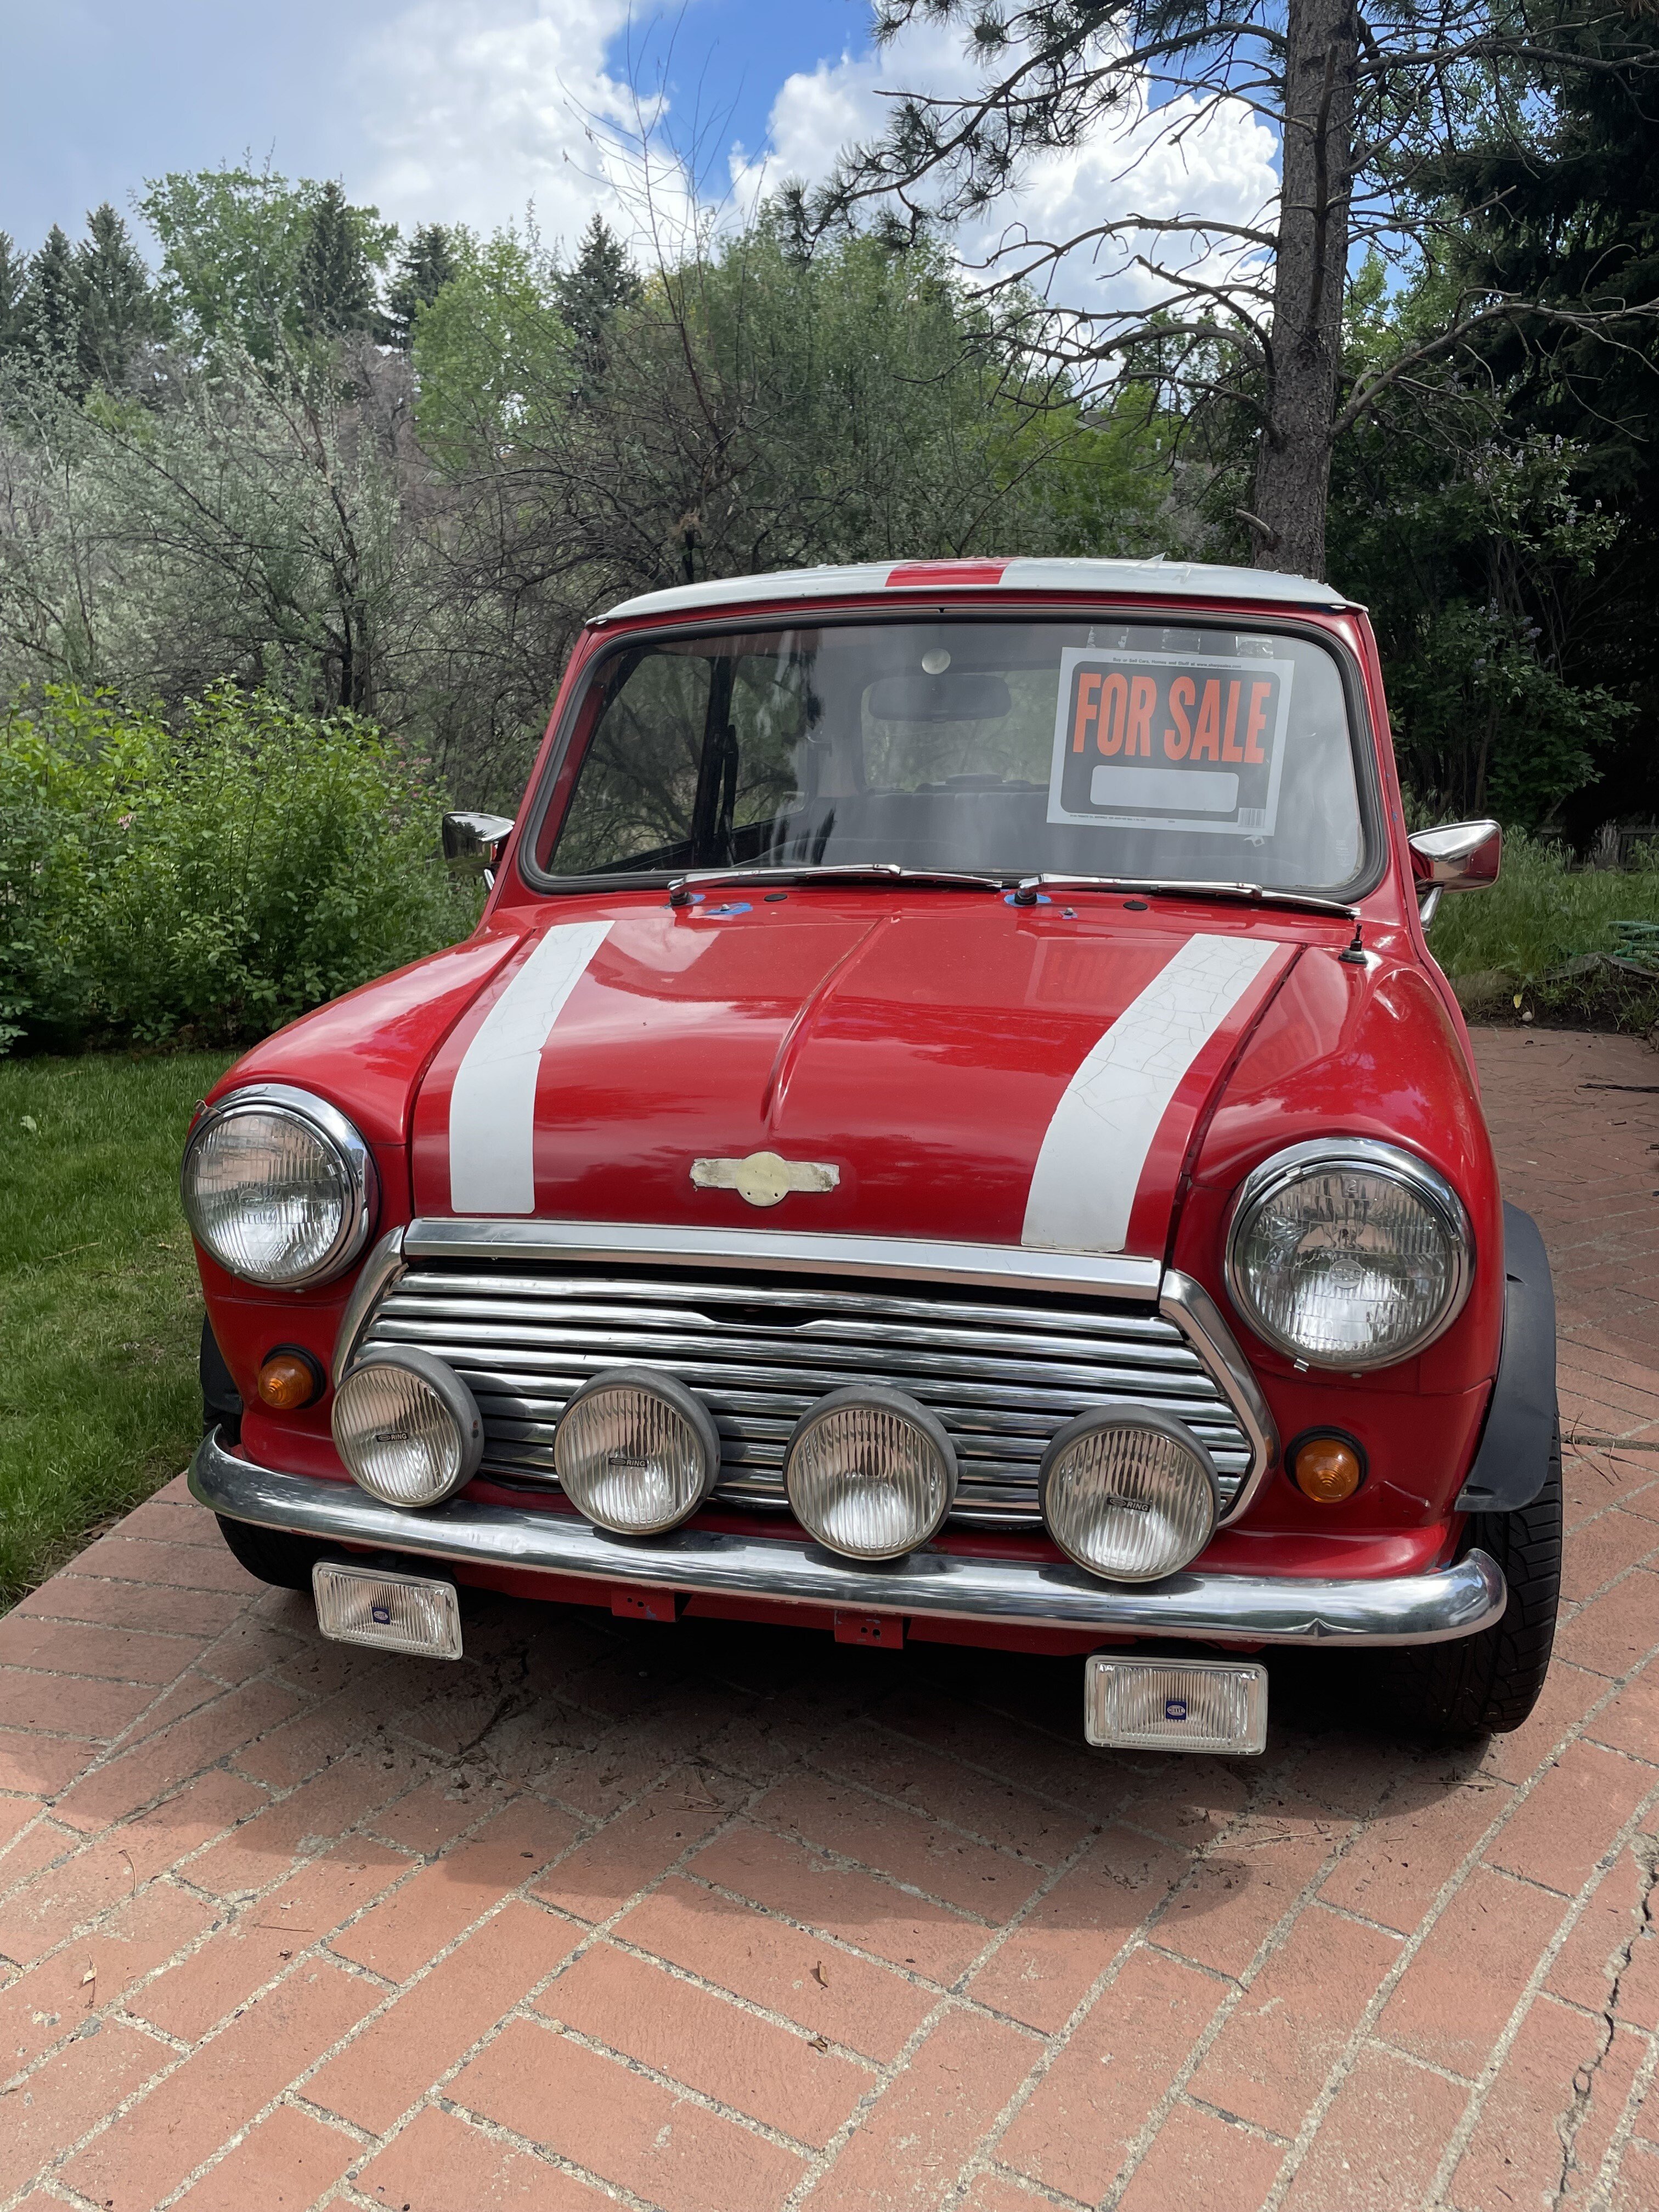 Used Austin Mini for sale - AutoScout24